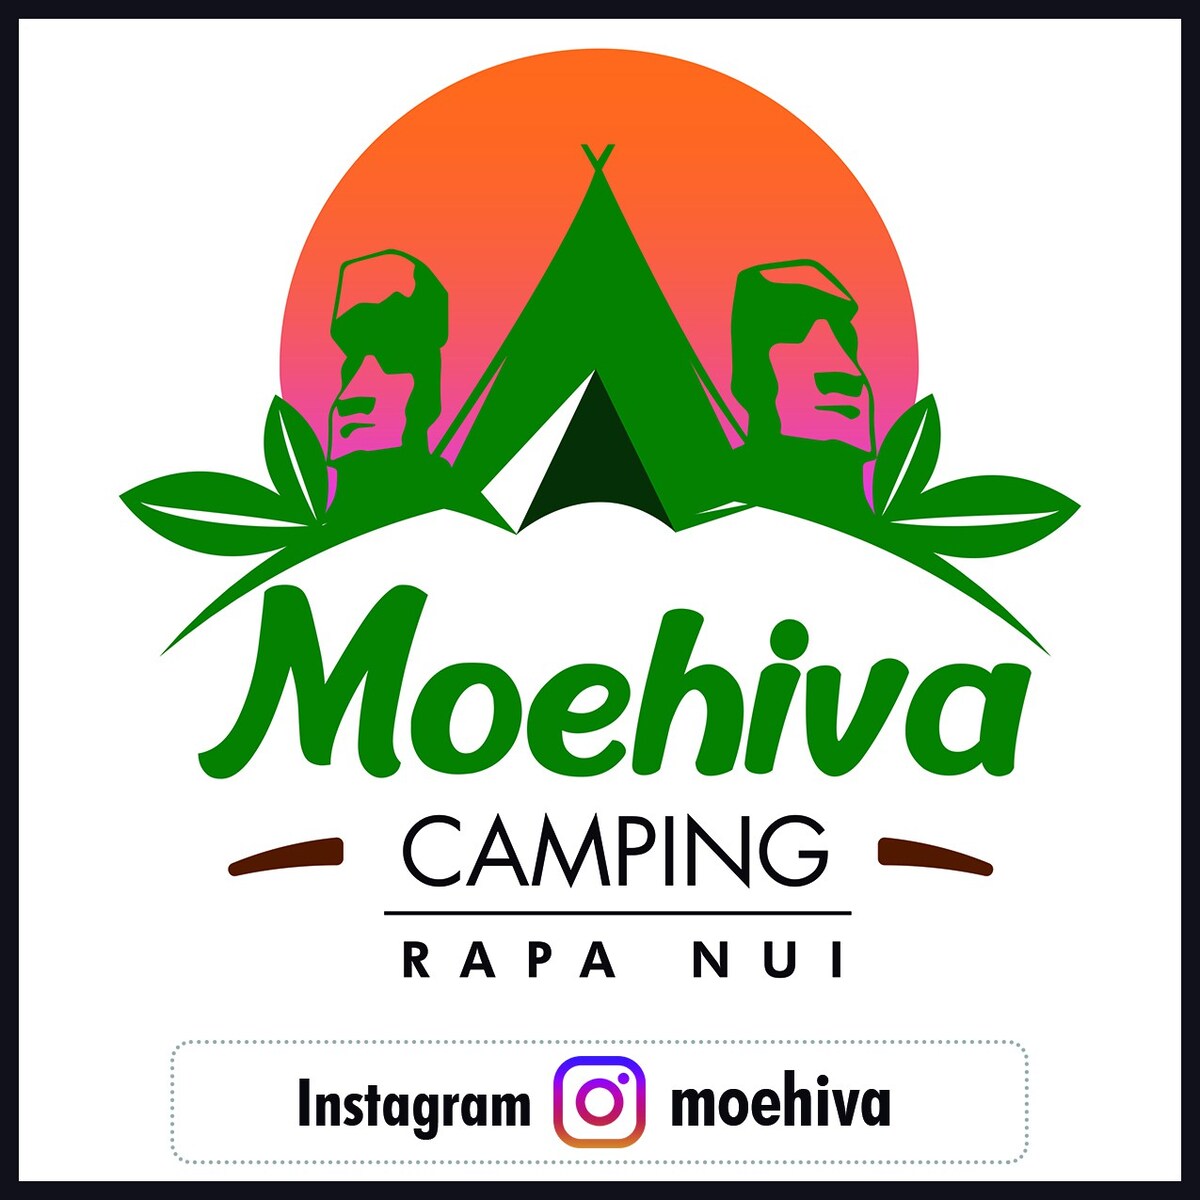 Camping Moehiva rapa nui